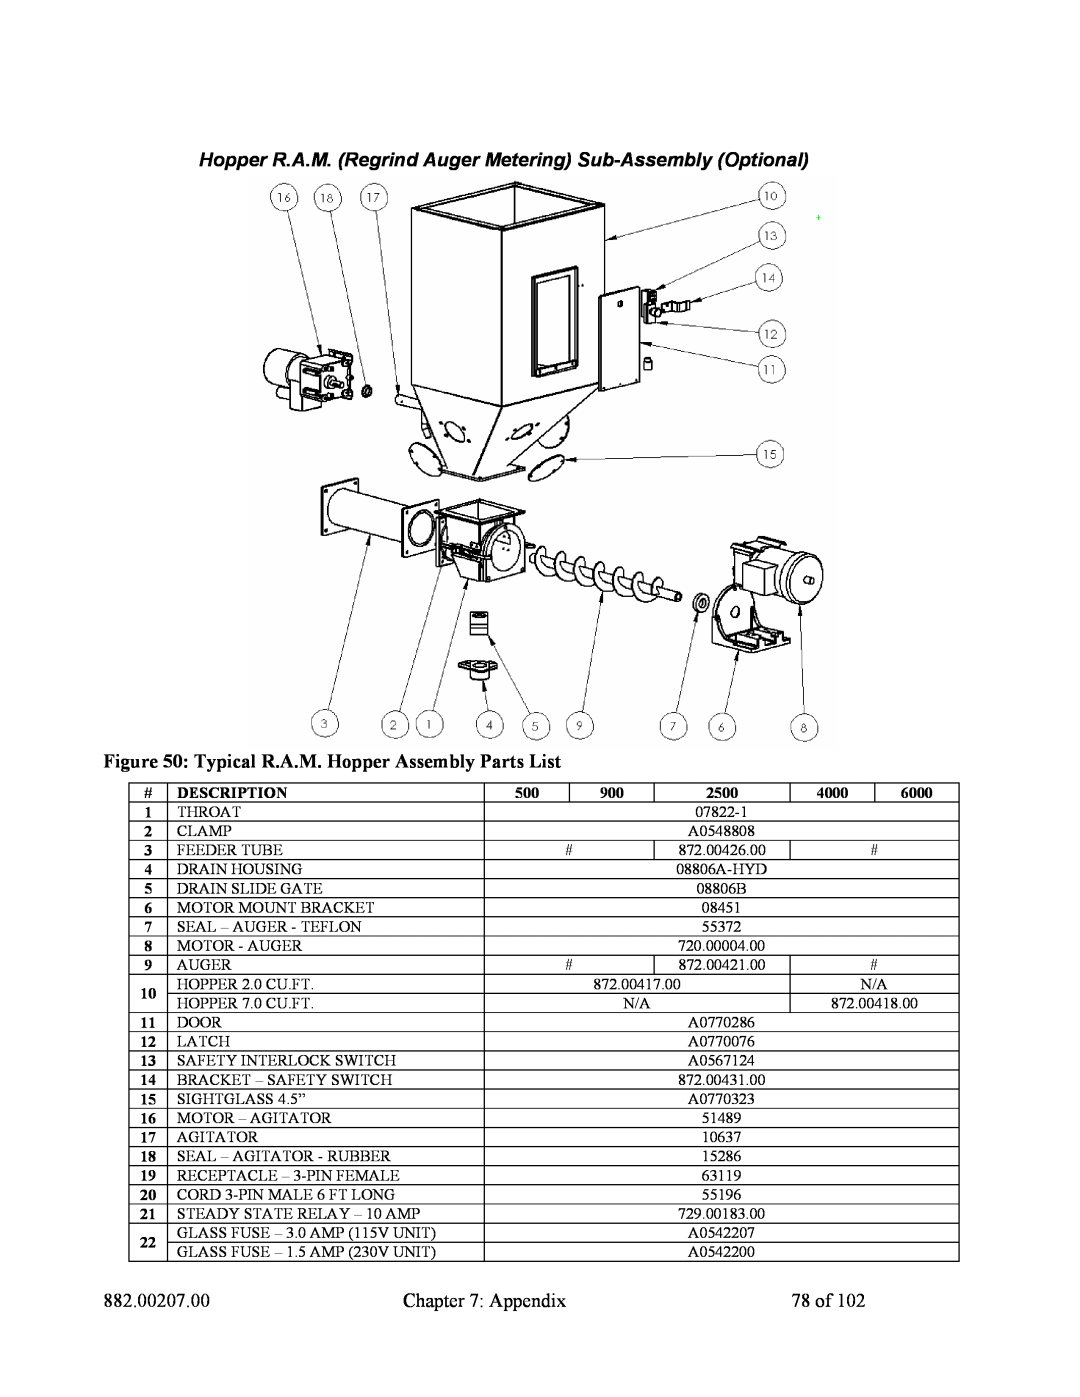 Mitsubishi Electronics 882.00207.00 specifications Appendix, 78 of 